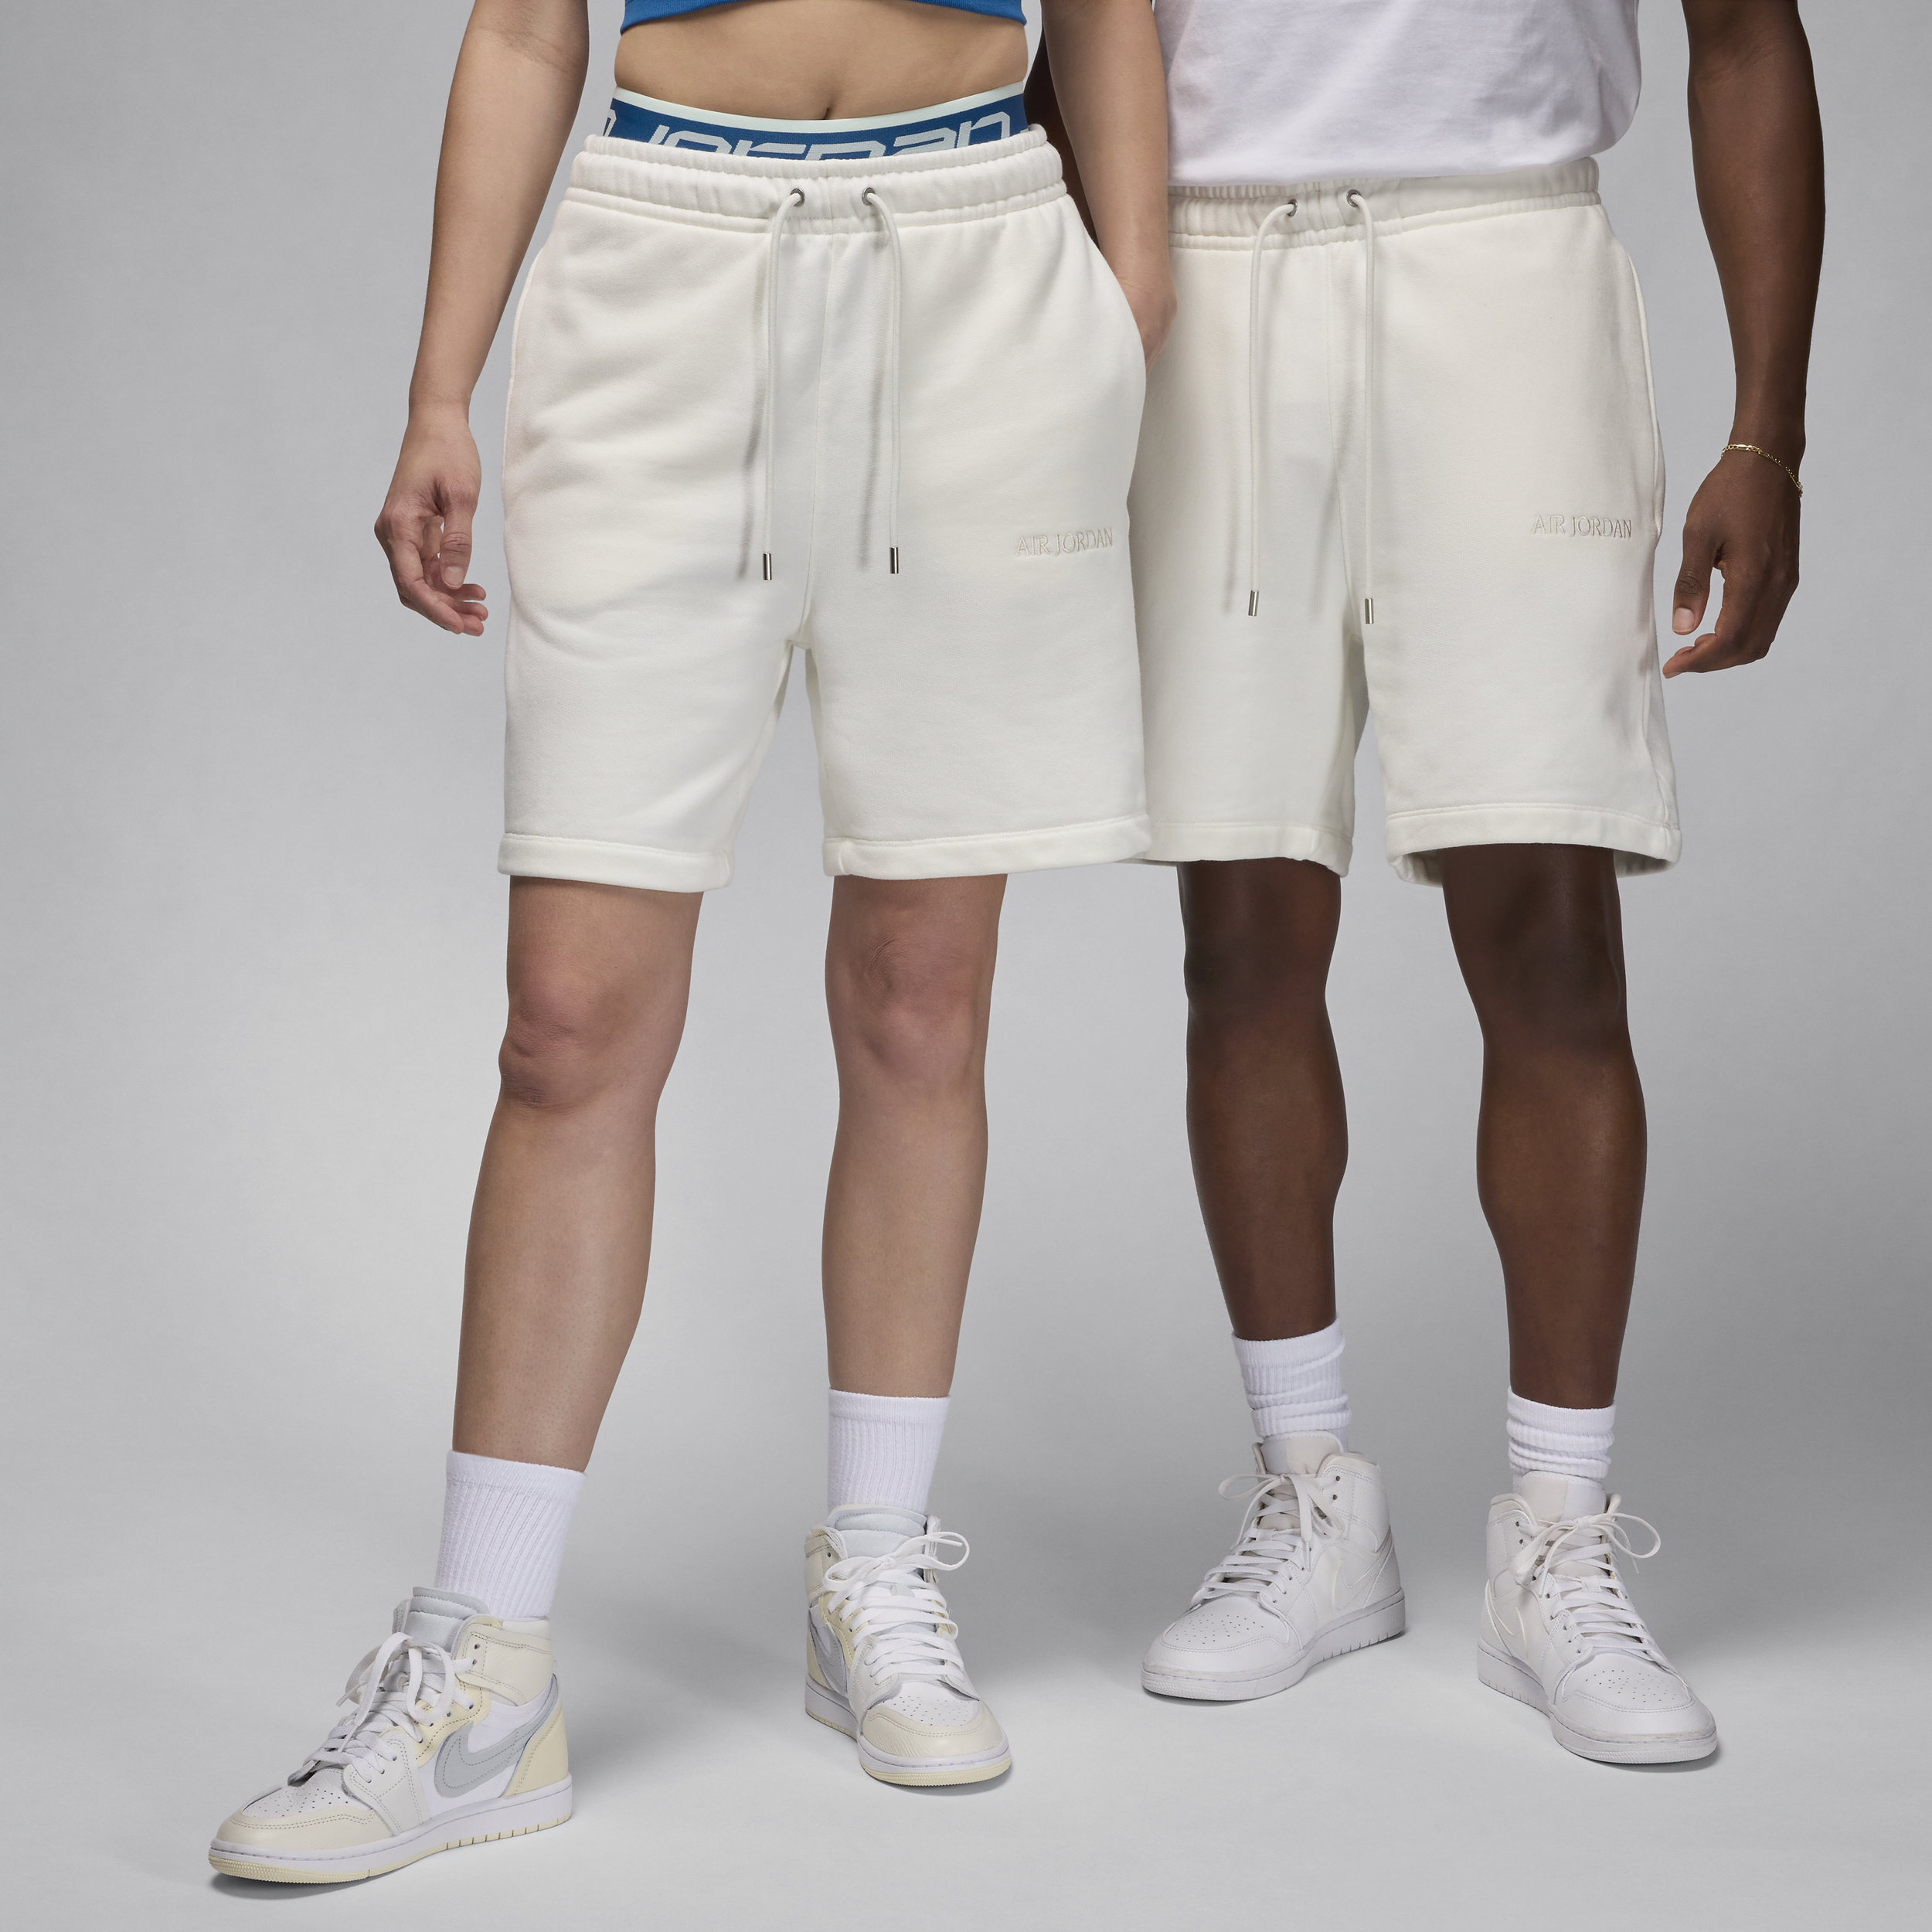 Nike Shorts in fleece Air Jordan Wordmark – Uomo - Bianco